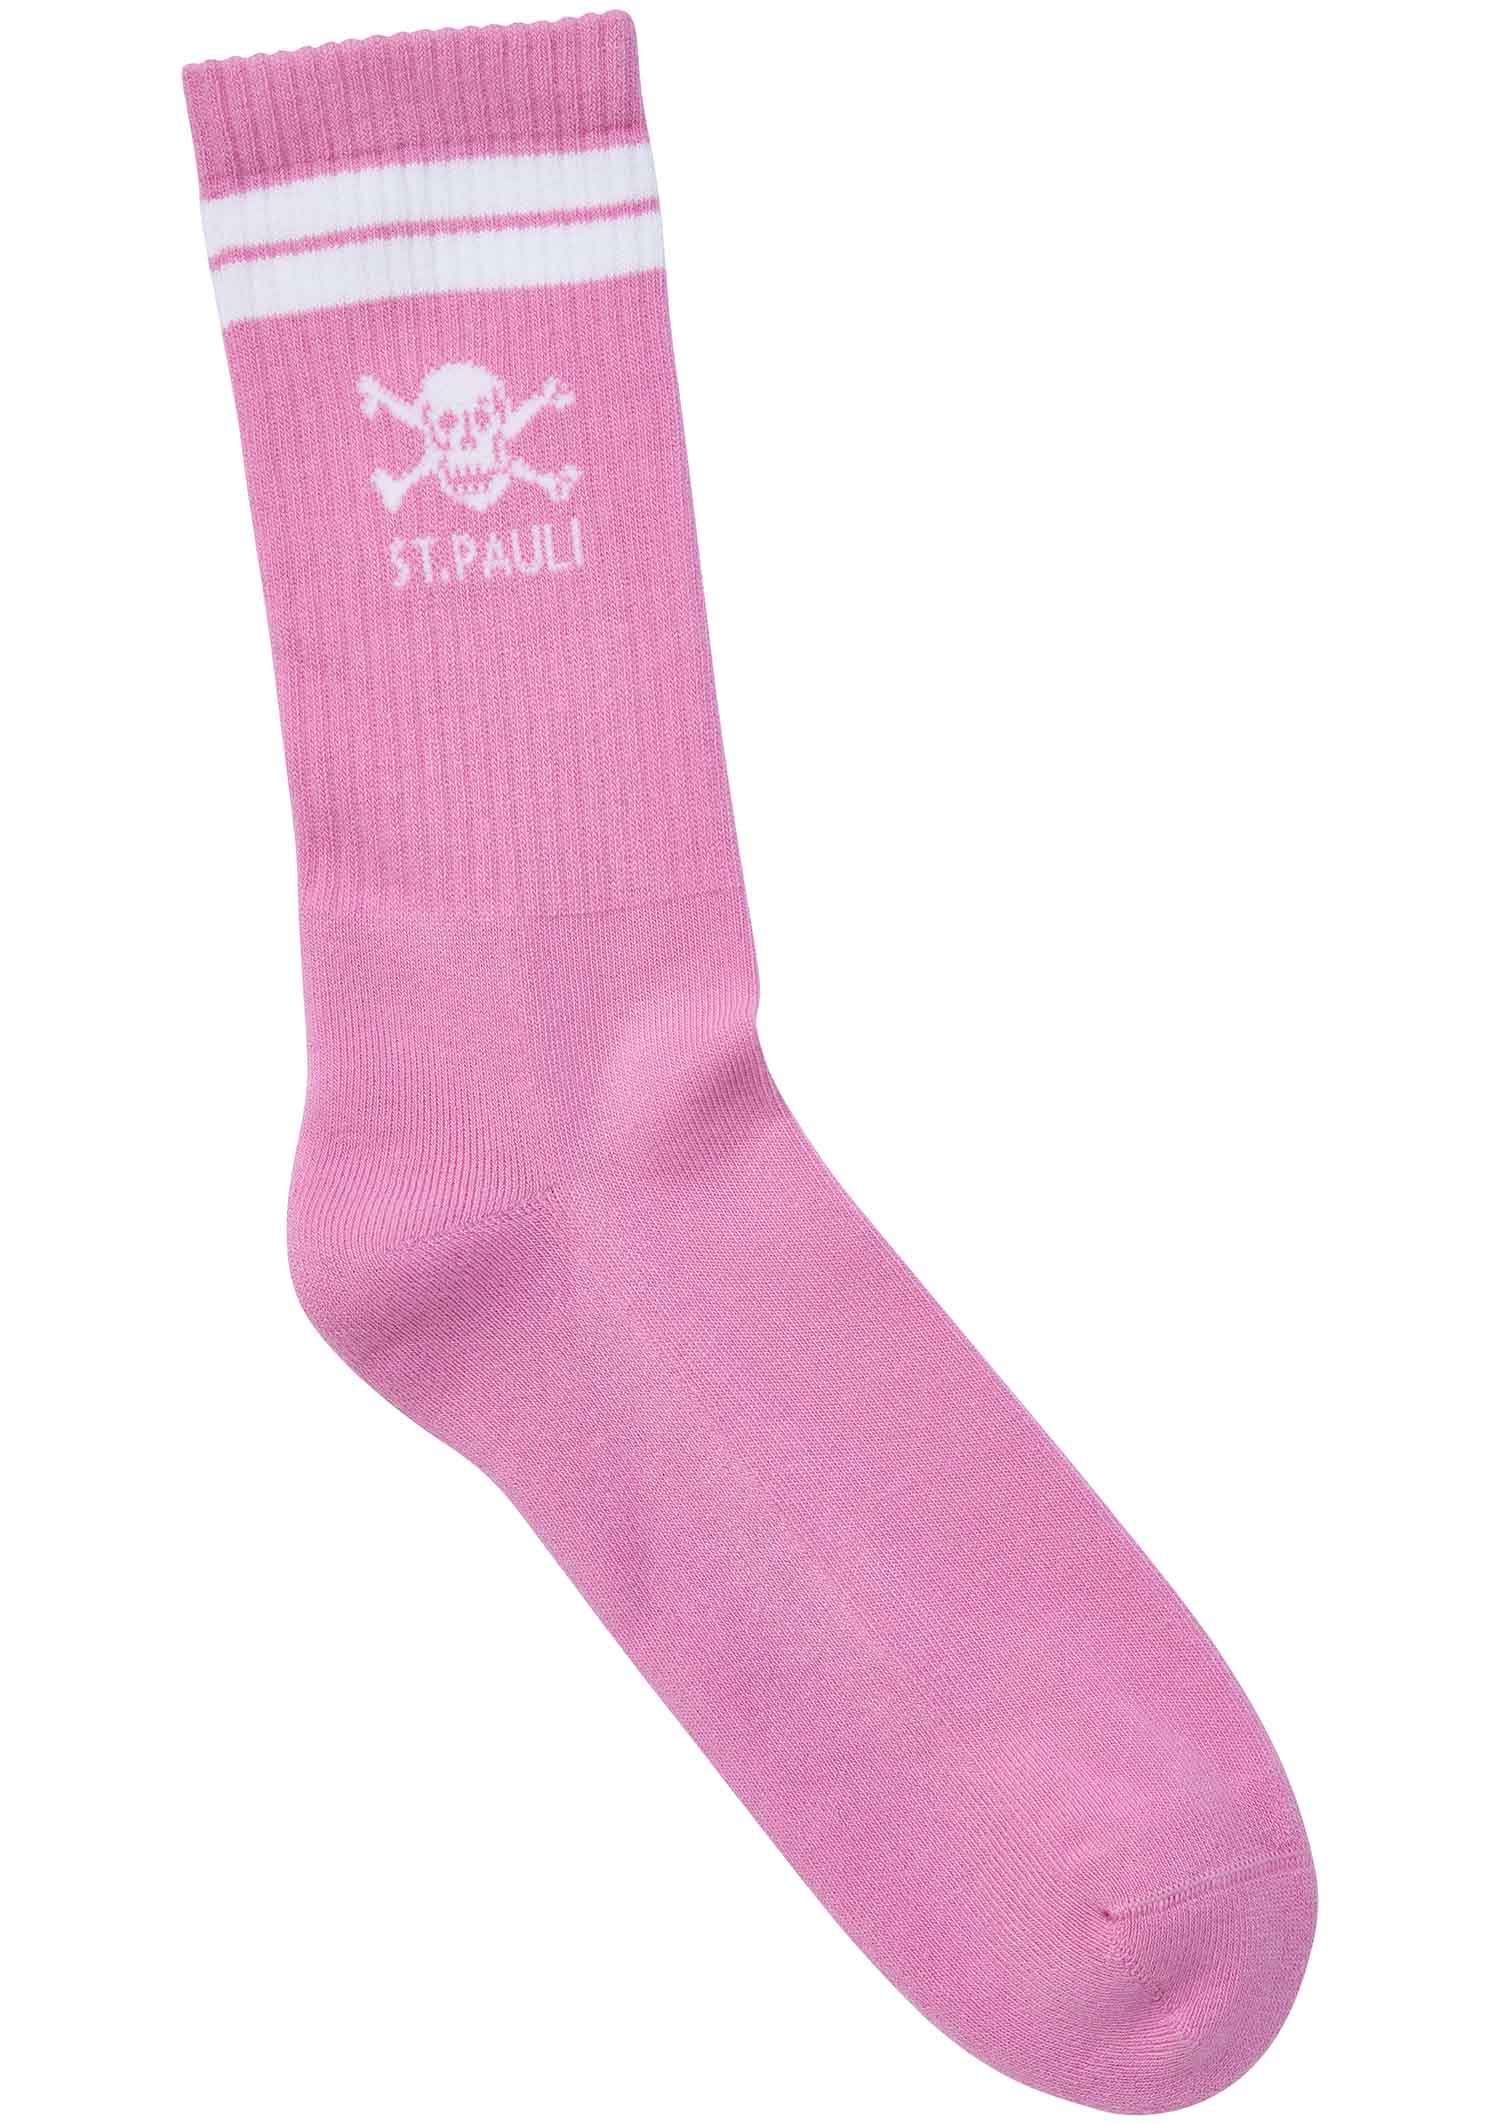 Socks "St. Pauli Skull and Crossbones" - pink